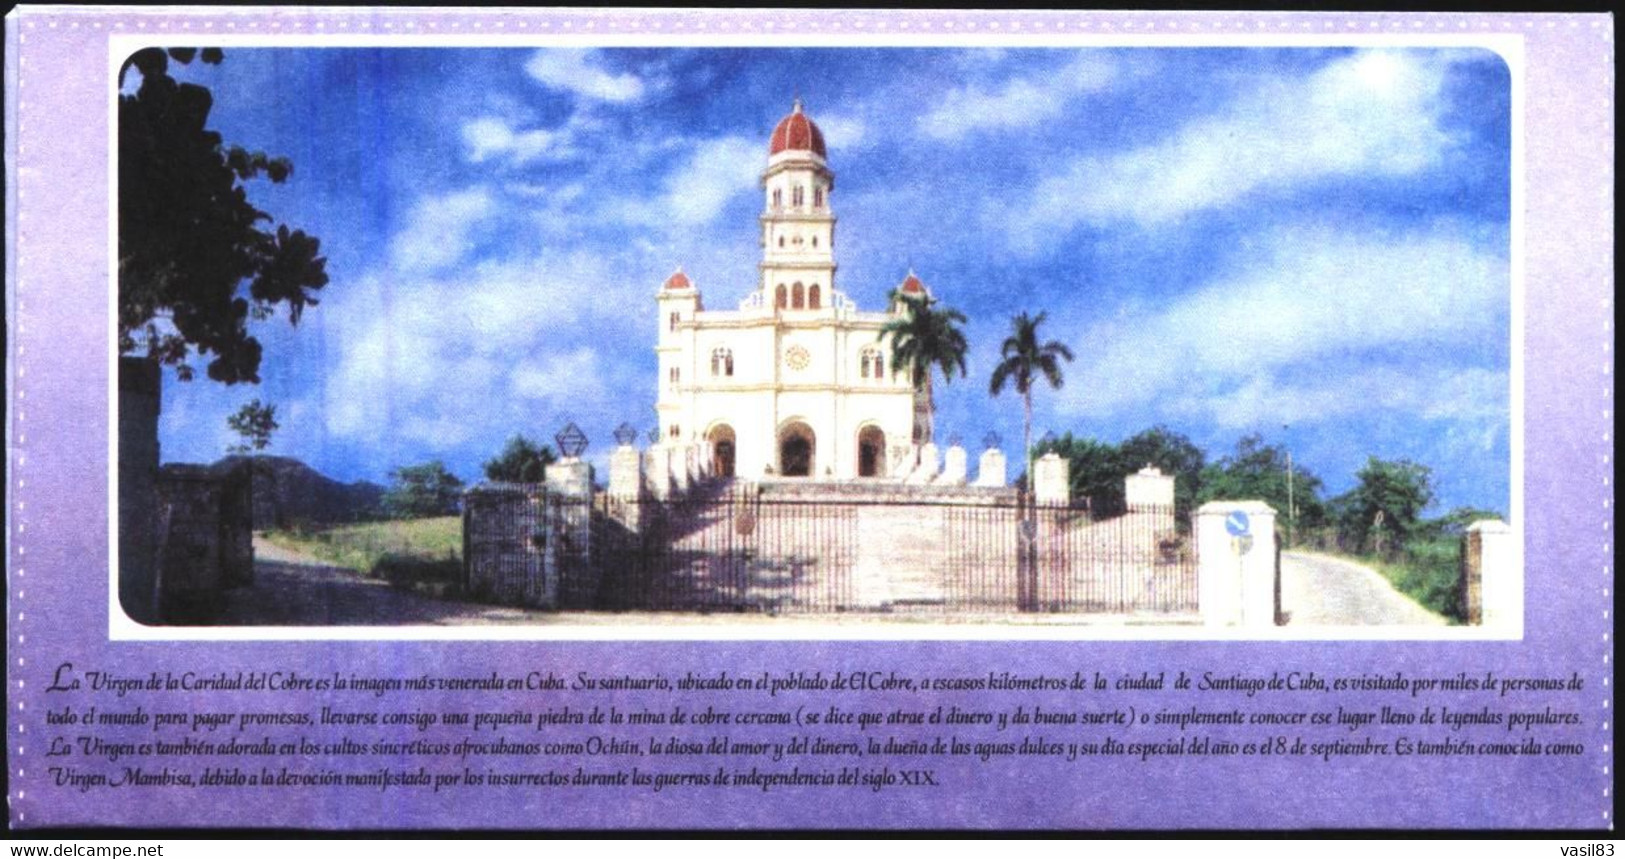 Aerogram Aerogramme  Church With Printed Stamp Religion 2003 From Cuba - Briefe U. Dokumente